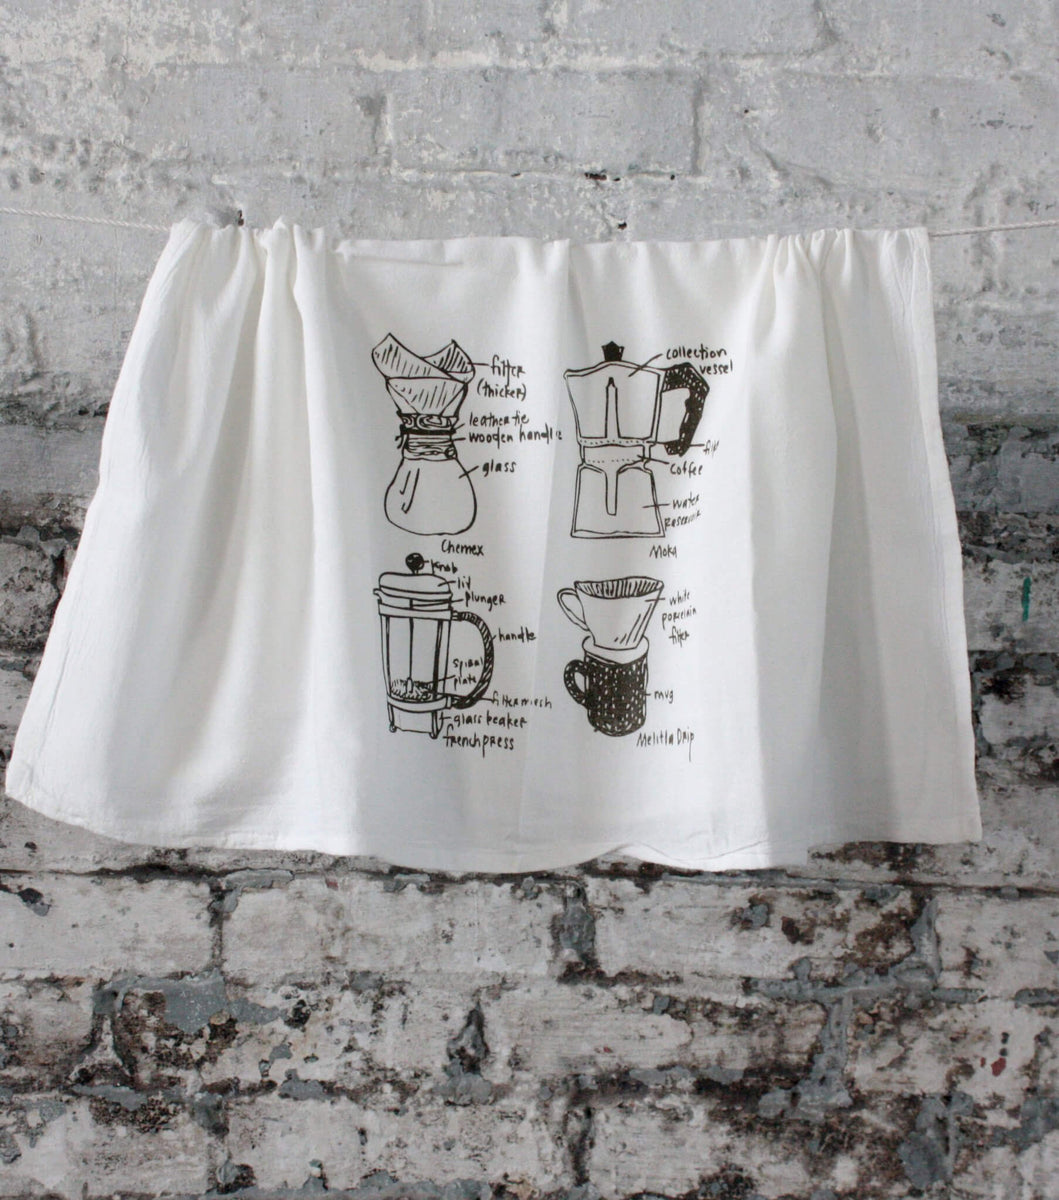 Kitchen Measurements Tea Towel – Girls Can Tell